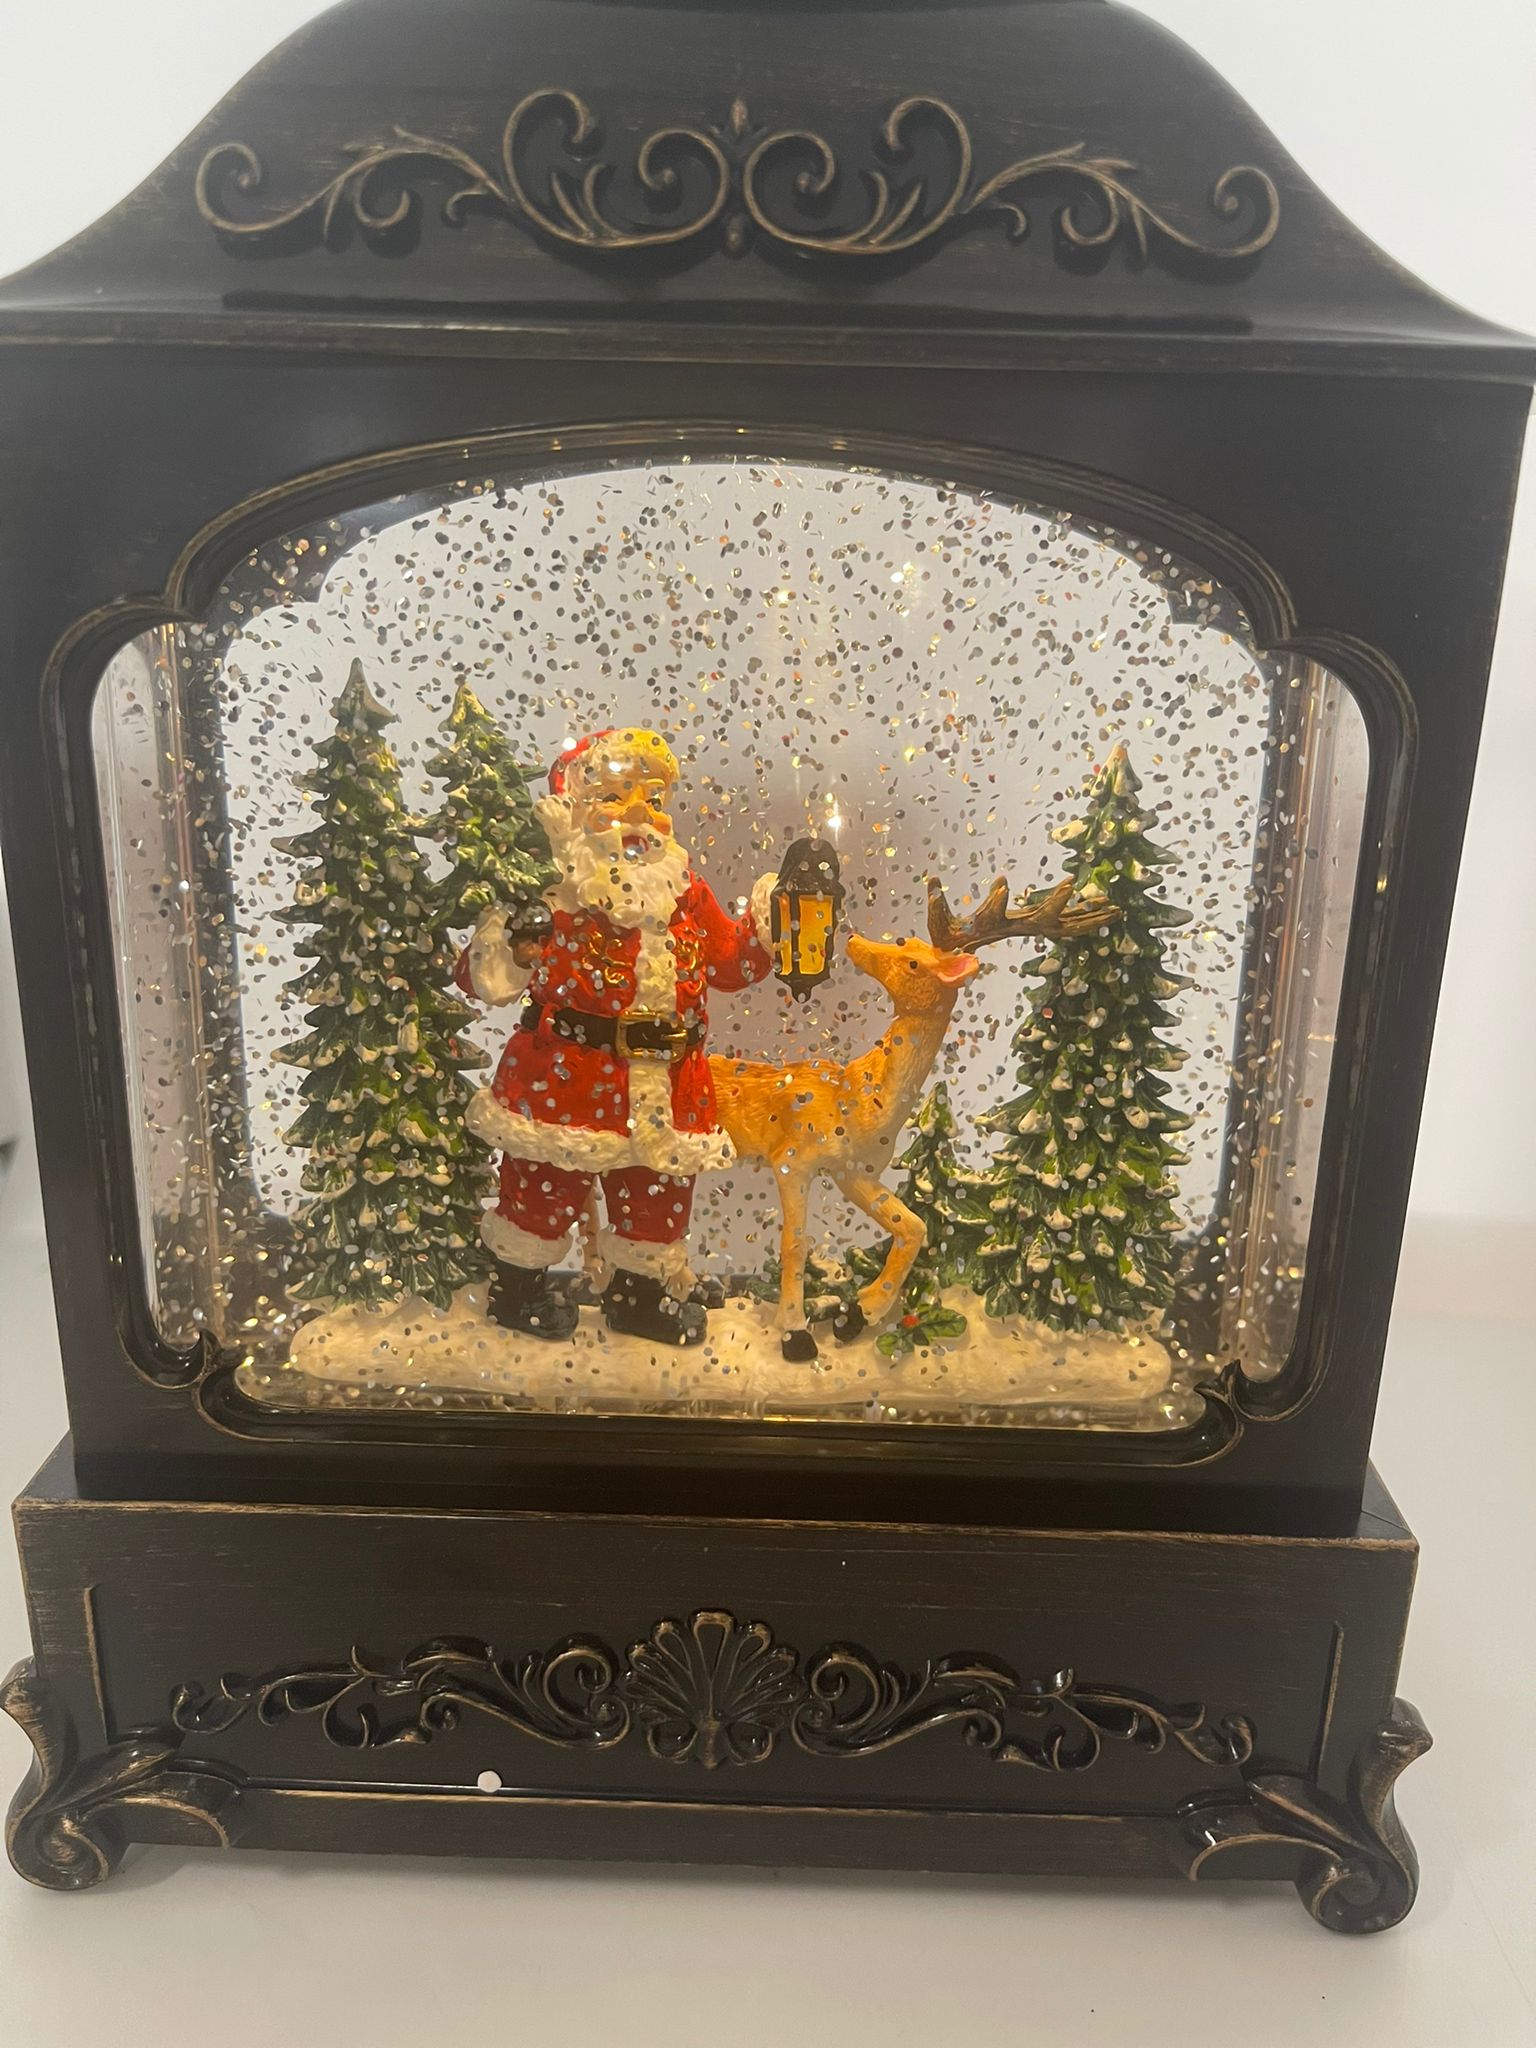 12" Illuminated Glitter Lantern with Holiday Scene by Valerie